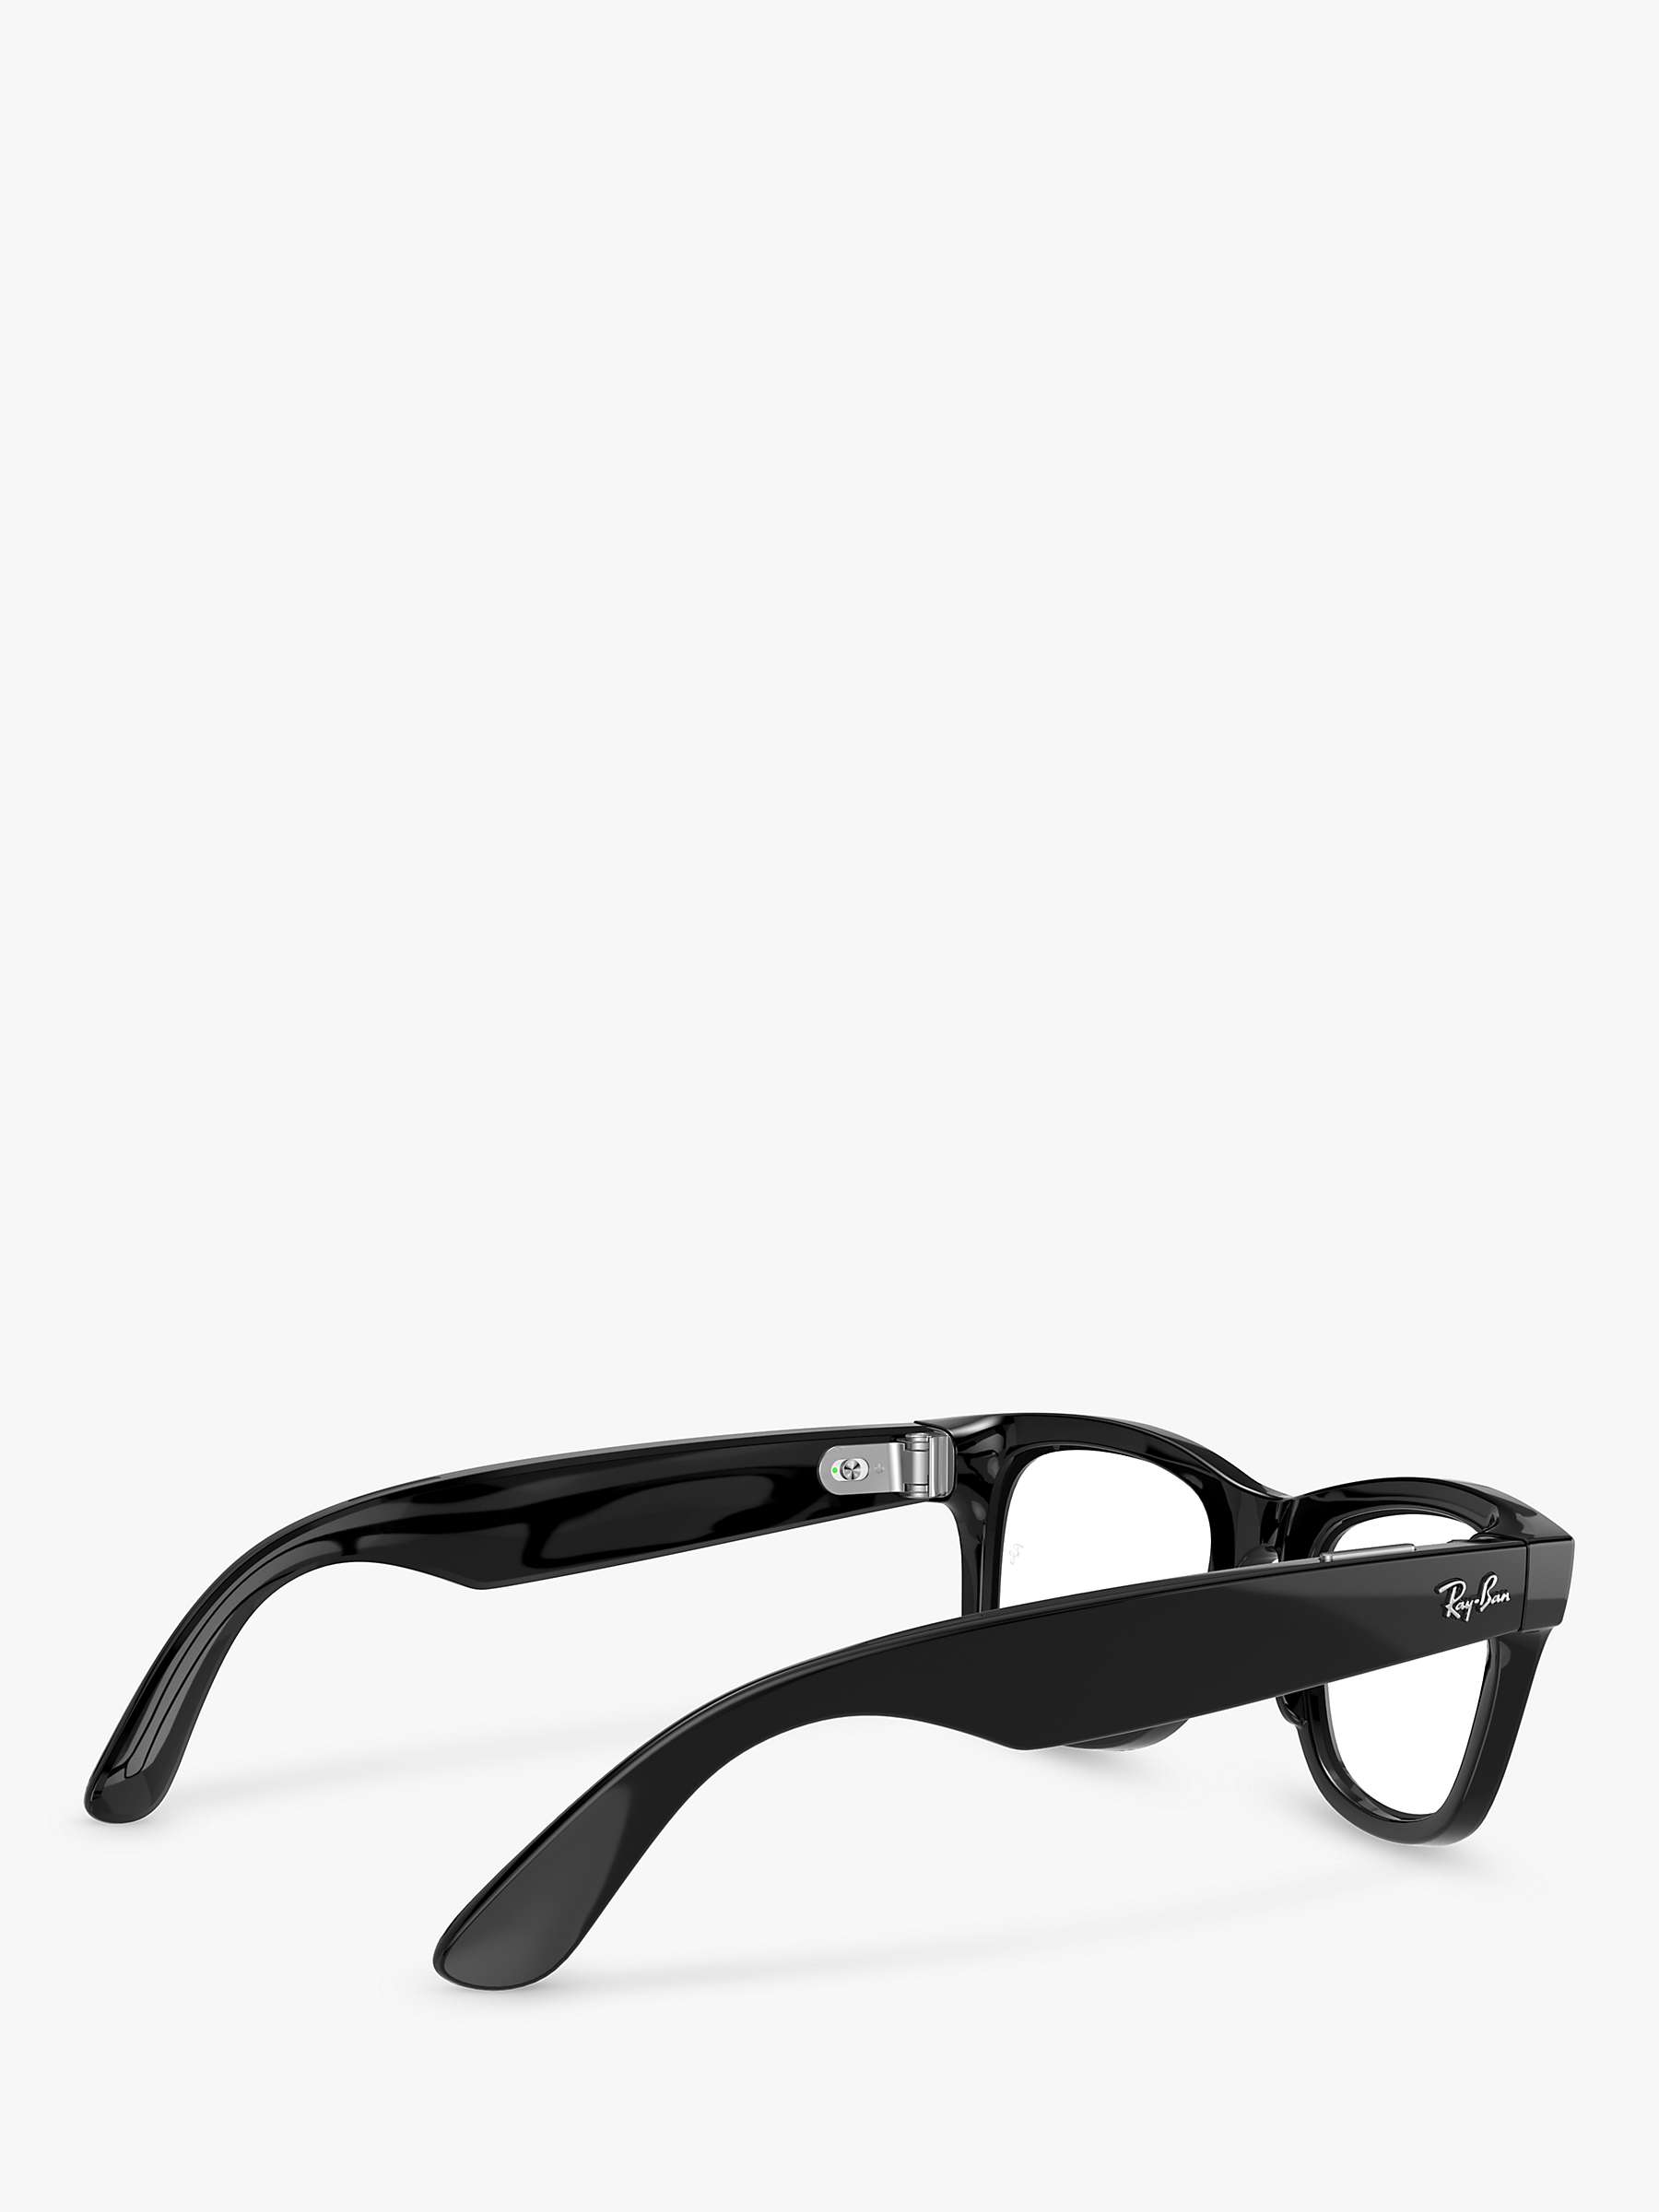 Buy Ray-Ban Stories Wayfarer Smart Sunglasses, Shiny Black/Clear Online at johnlewis.com